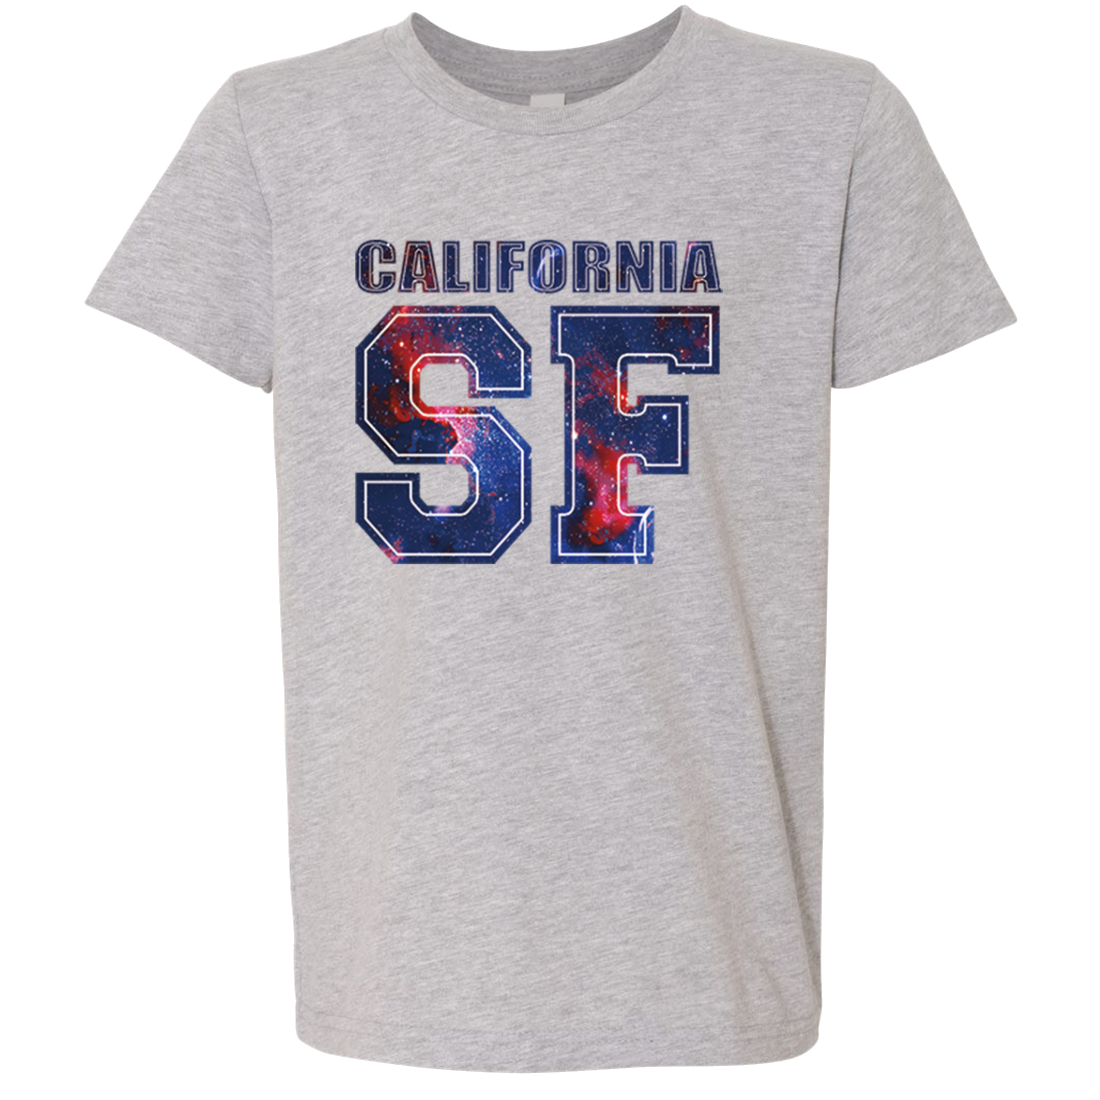 Women's Touch Gray/Black San Francisco Giants Home Run Tri-Blend Short Sleeve T-Shirt Size: Small